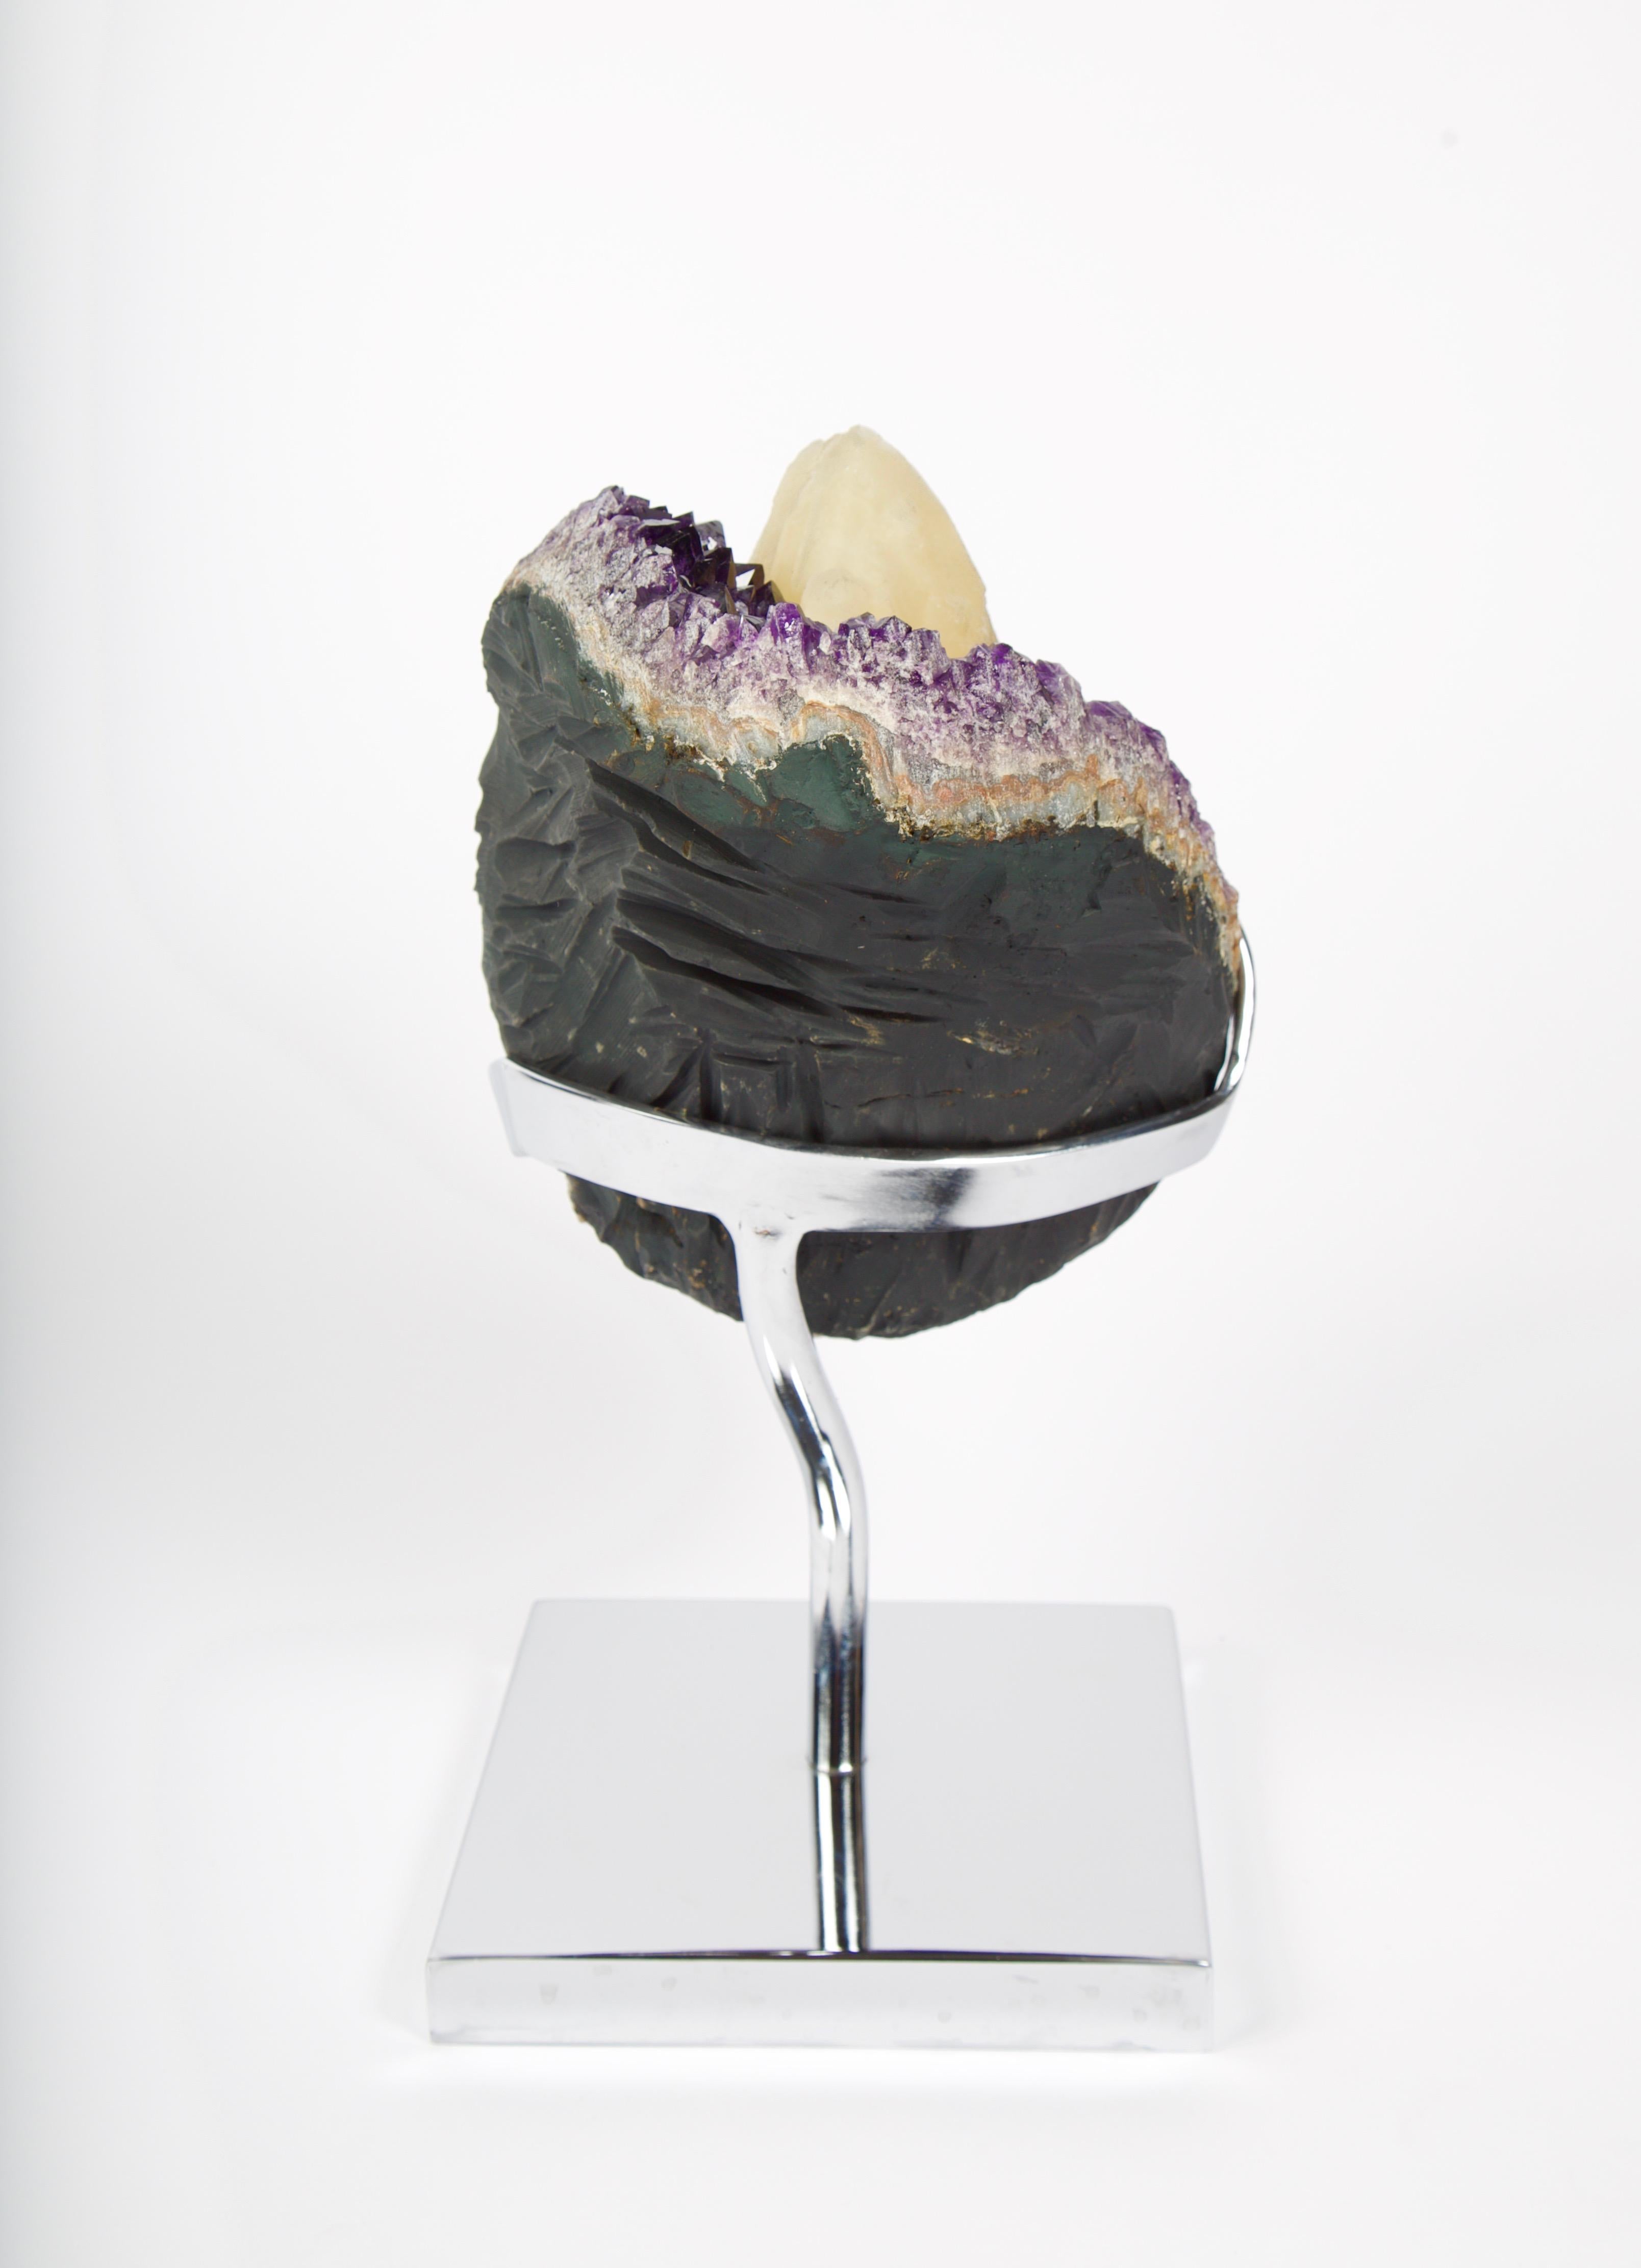 Gem Grade Amethyst Geode Sculpture, Uruguay In Excellent Condition For Sale In Los Angeles, CA